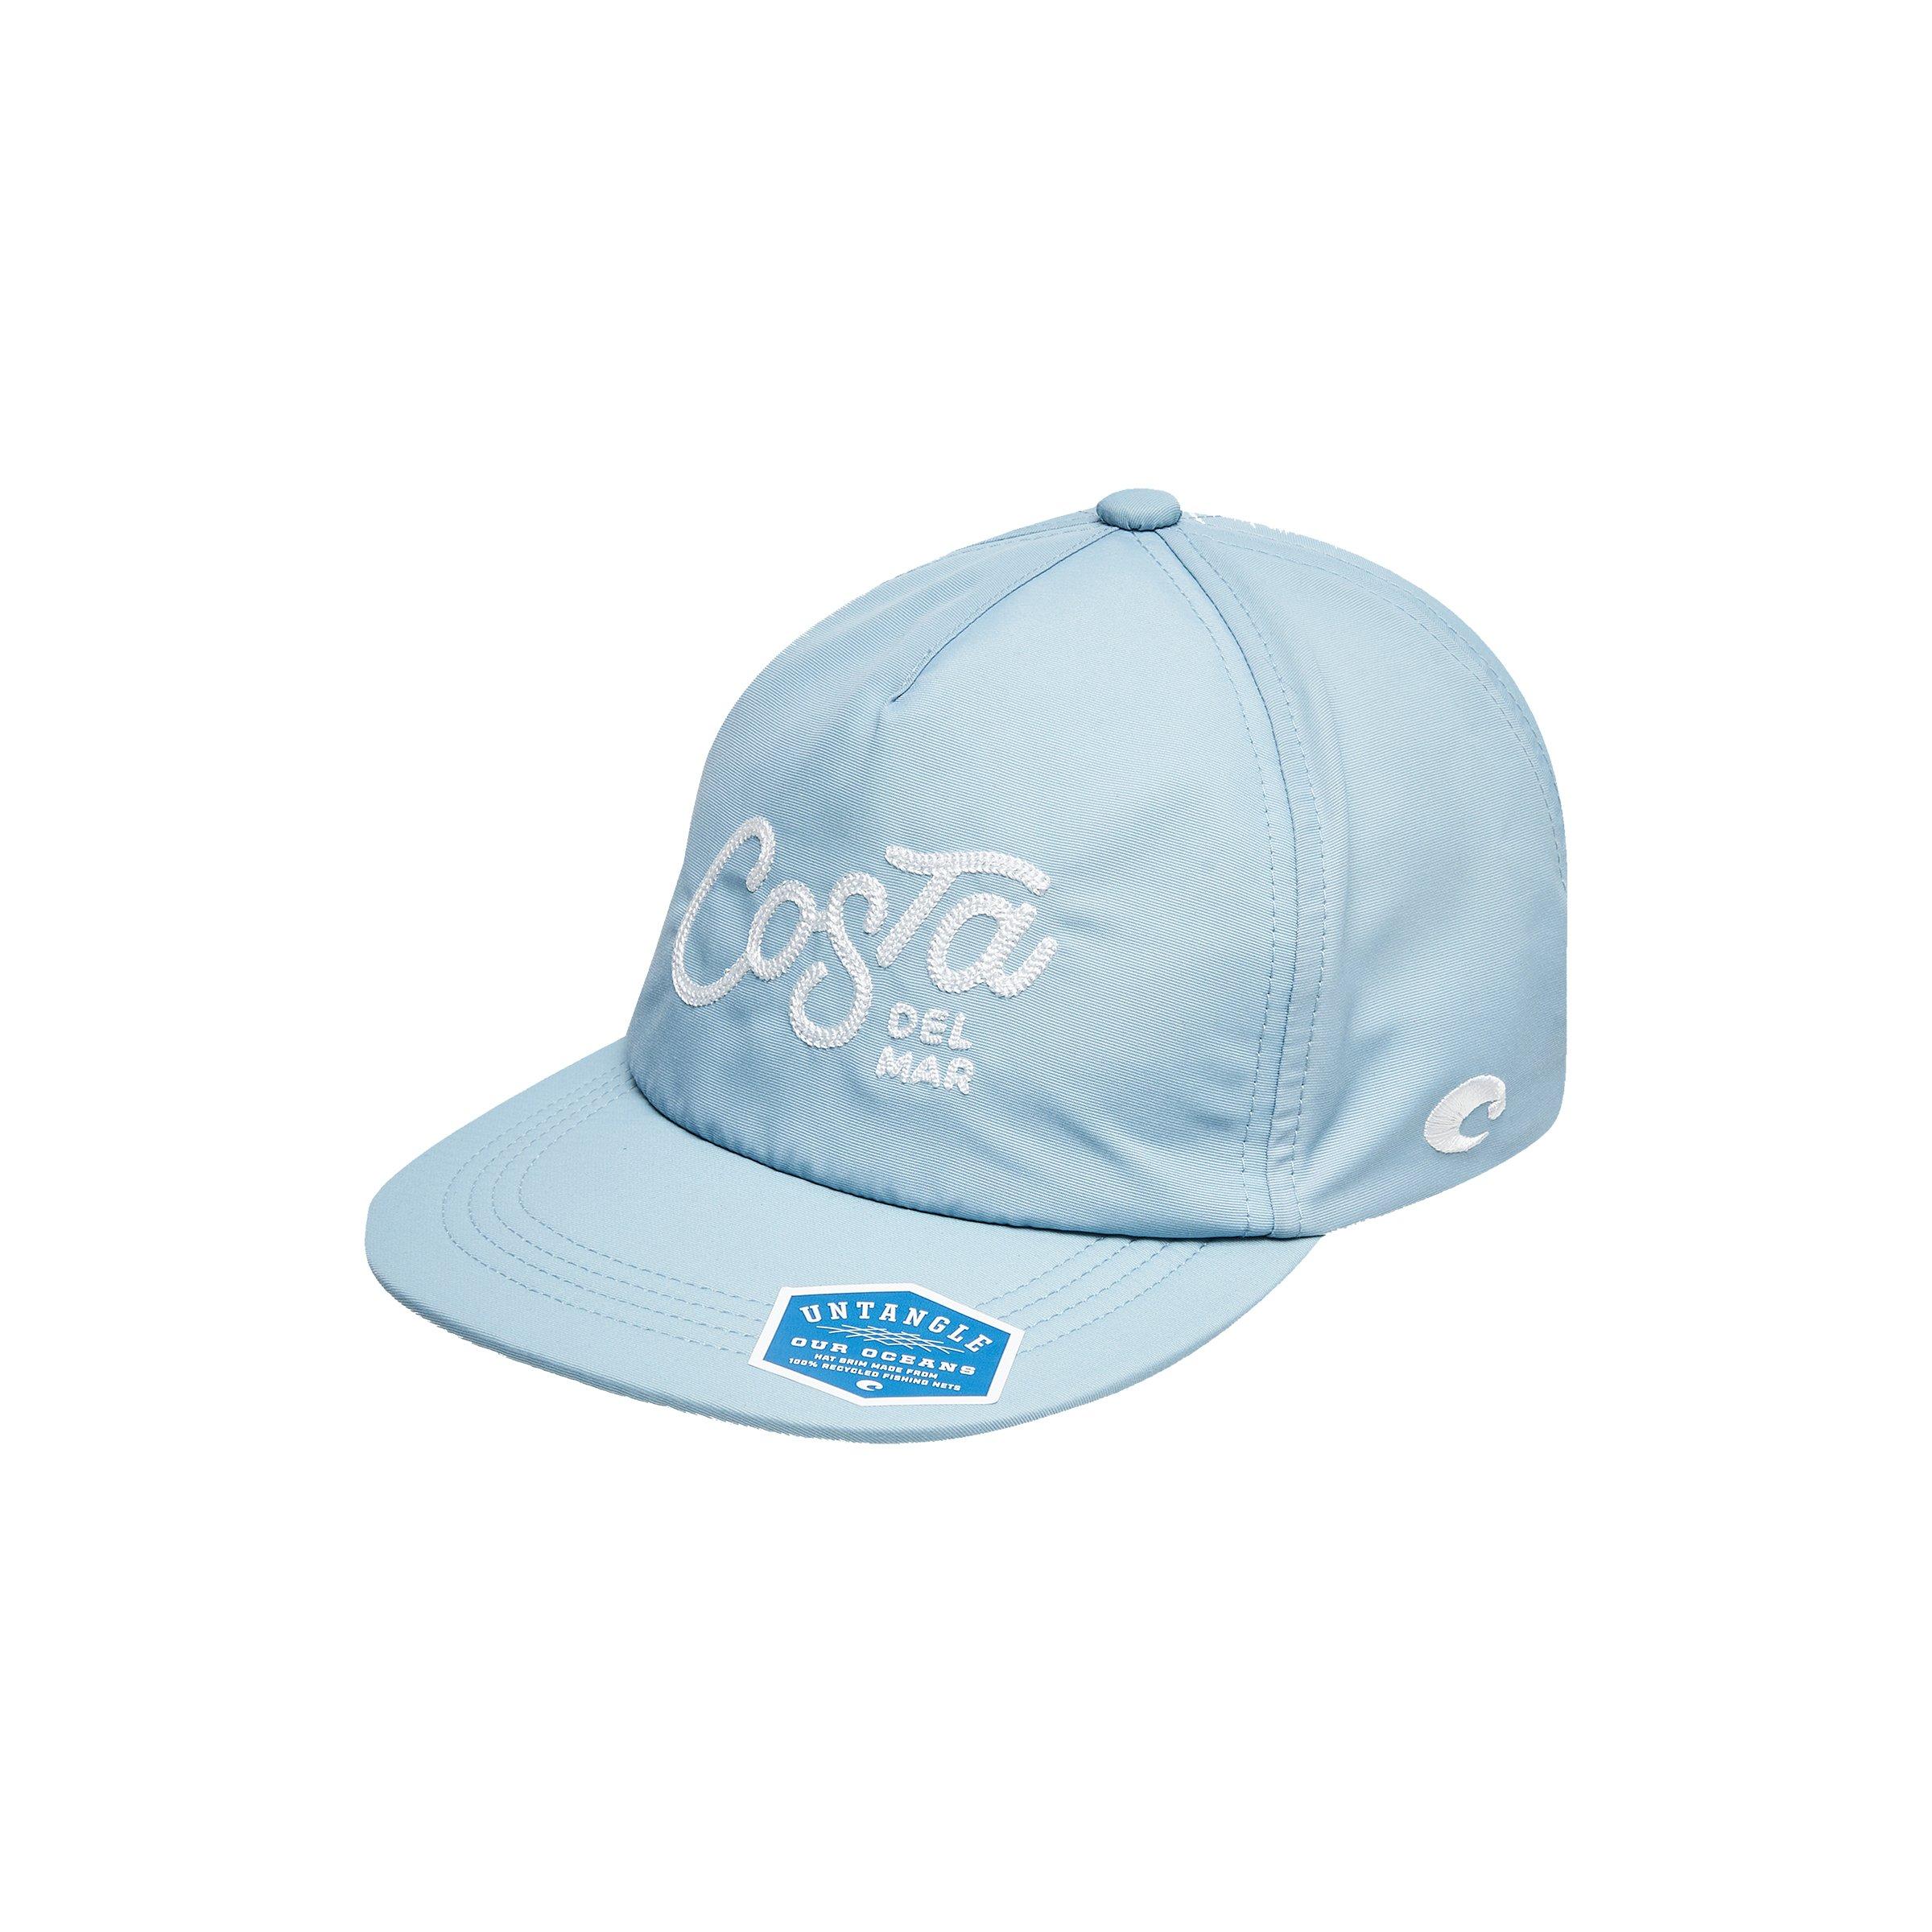 Costa Del Mar soft cotton Blue w/ white poly Mesh Hat Cap Adjustable Back